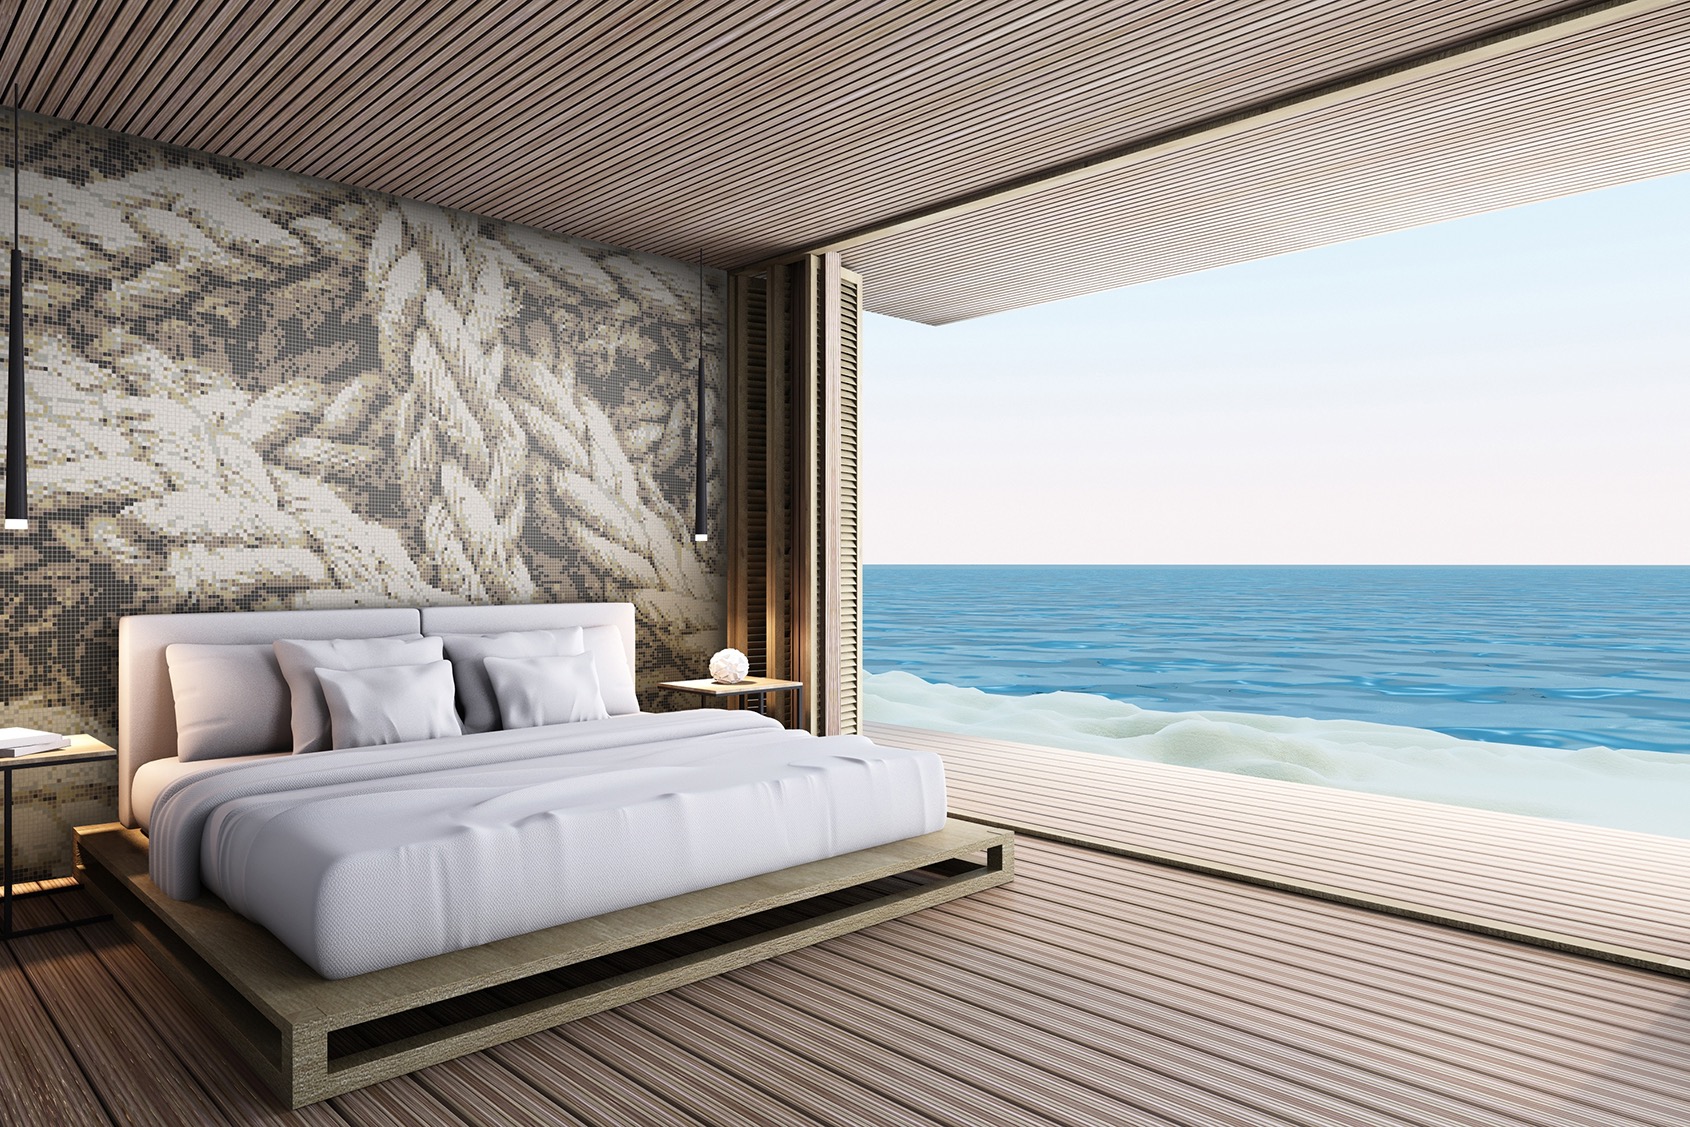 twine-sepia-vacation-resort-bedroom-residential-bedroom-wall-neutral-tile-mosaic-mural-by-artaic-0312906